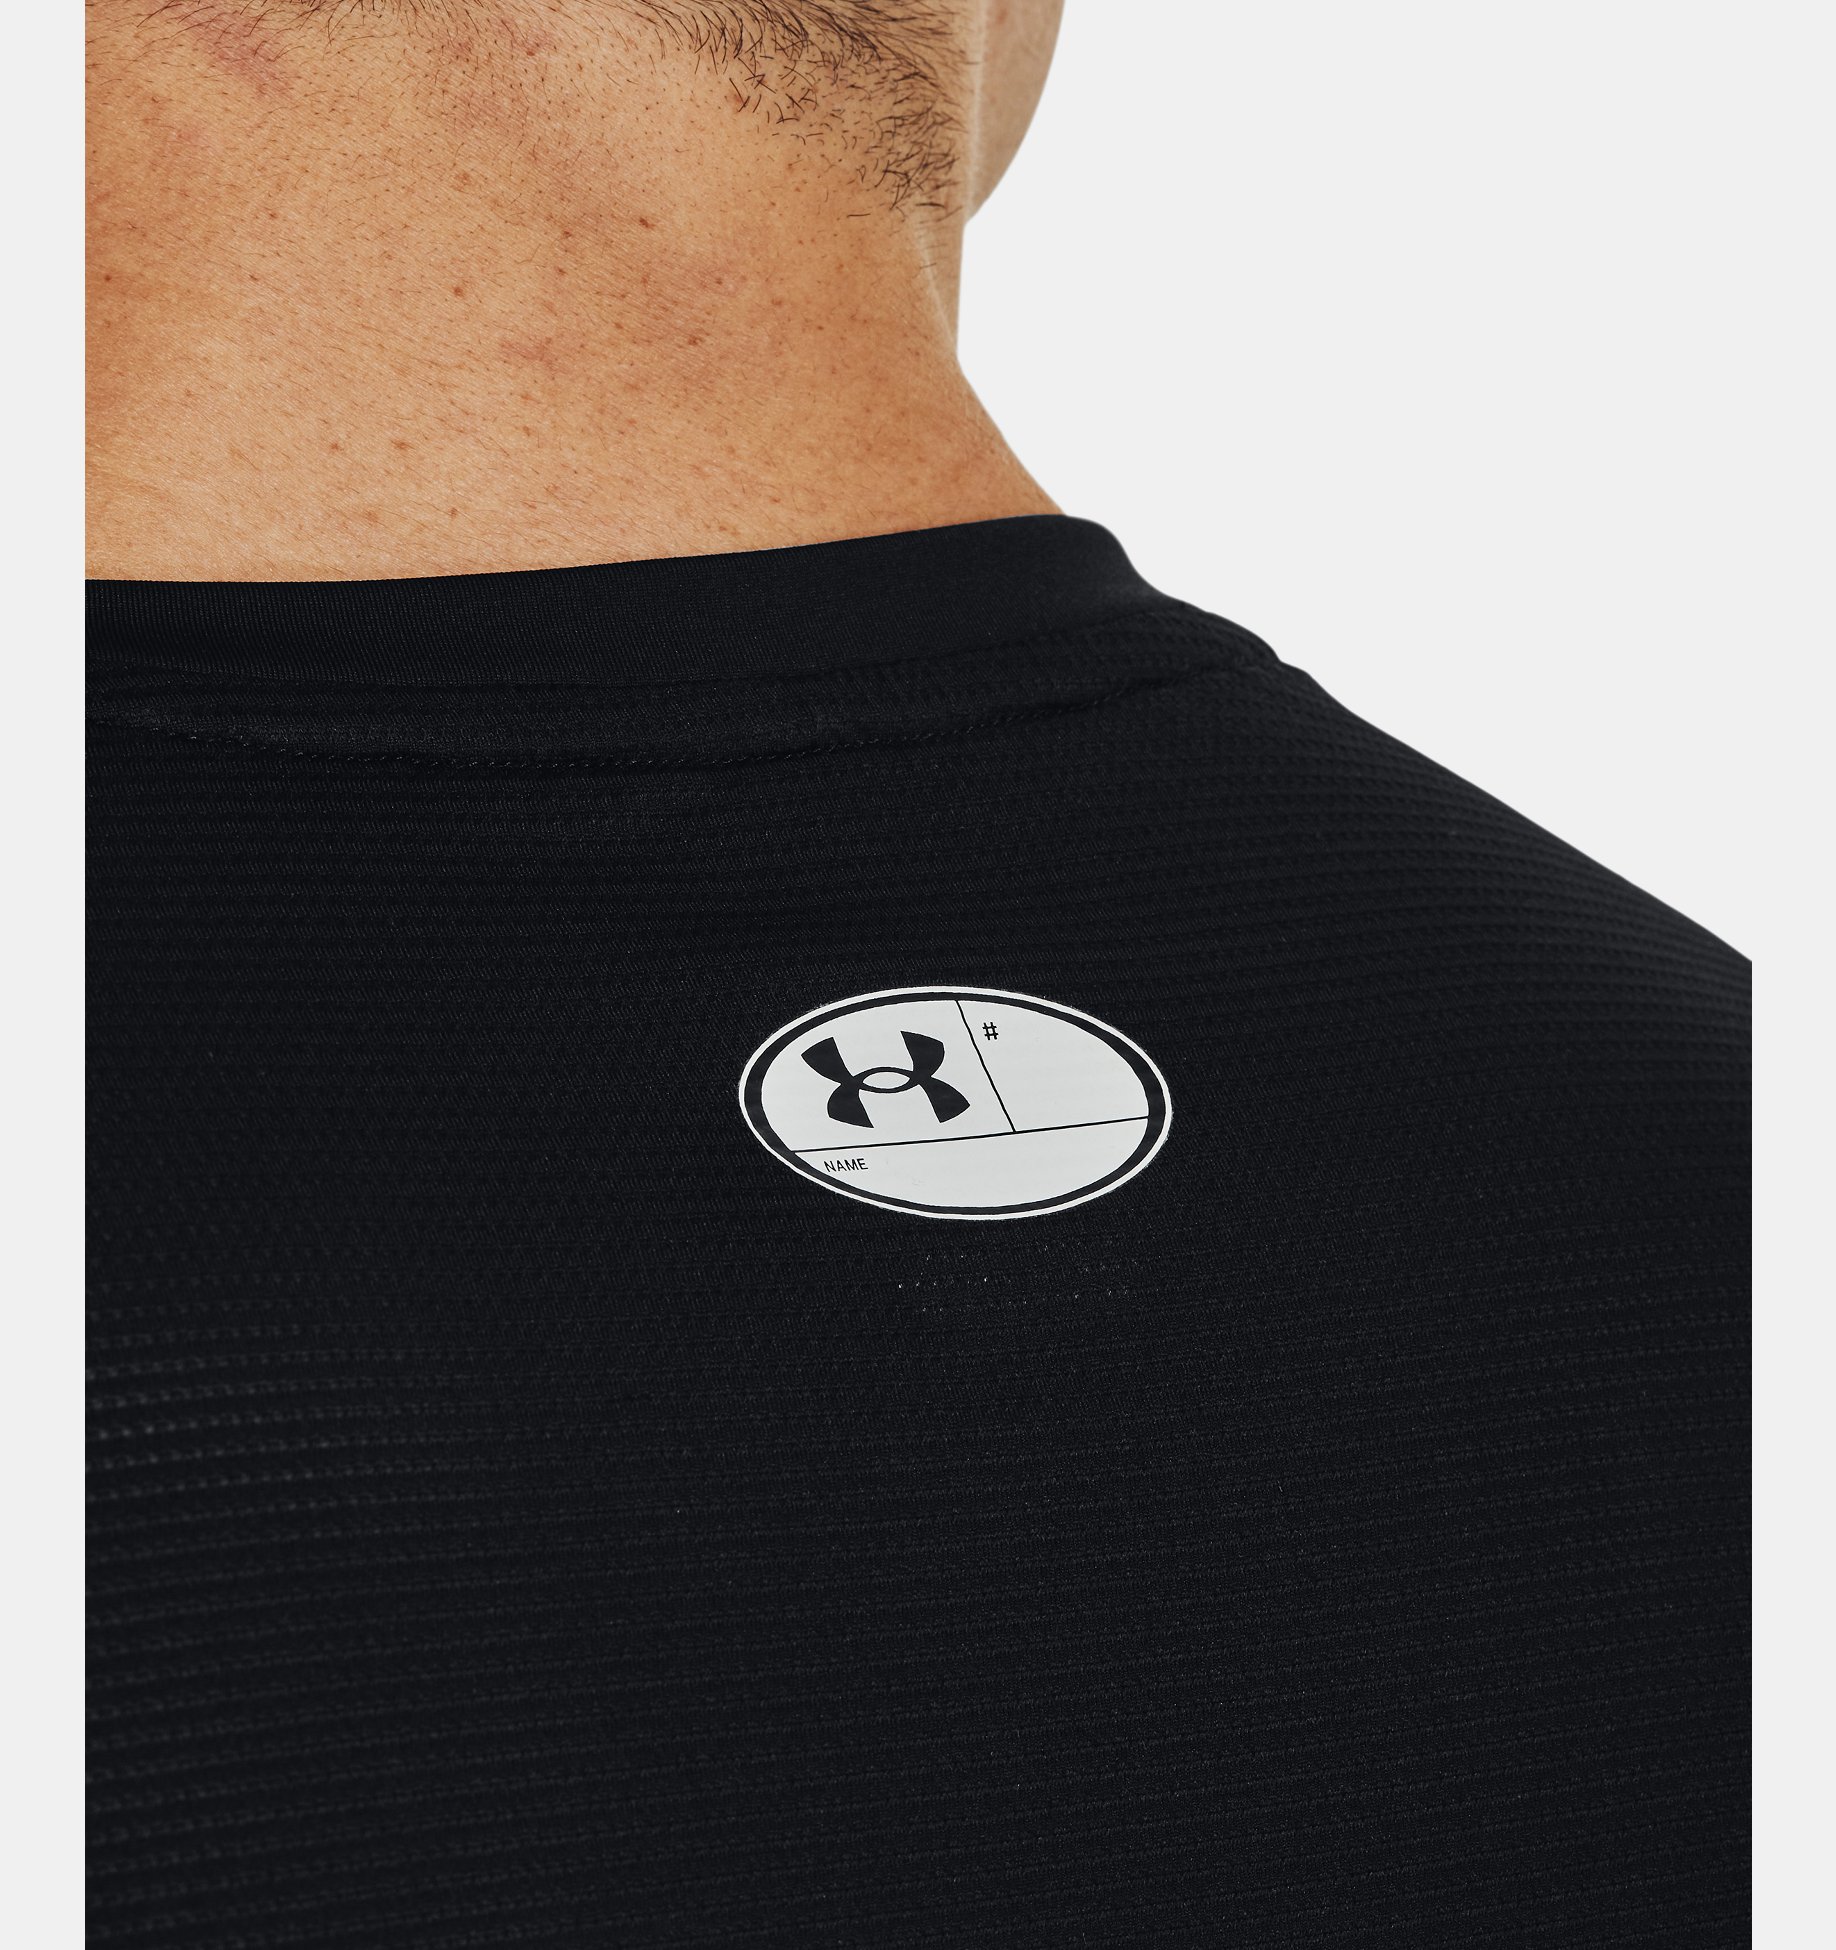 Men's HeatGear® Vent Fitted Short Sleeve